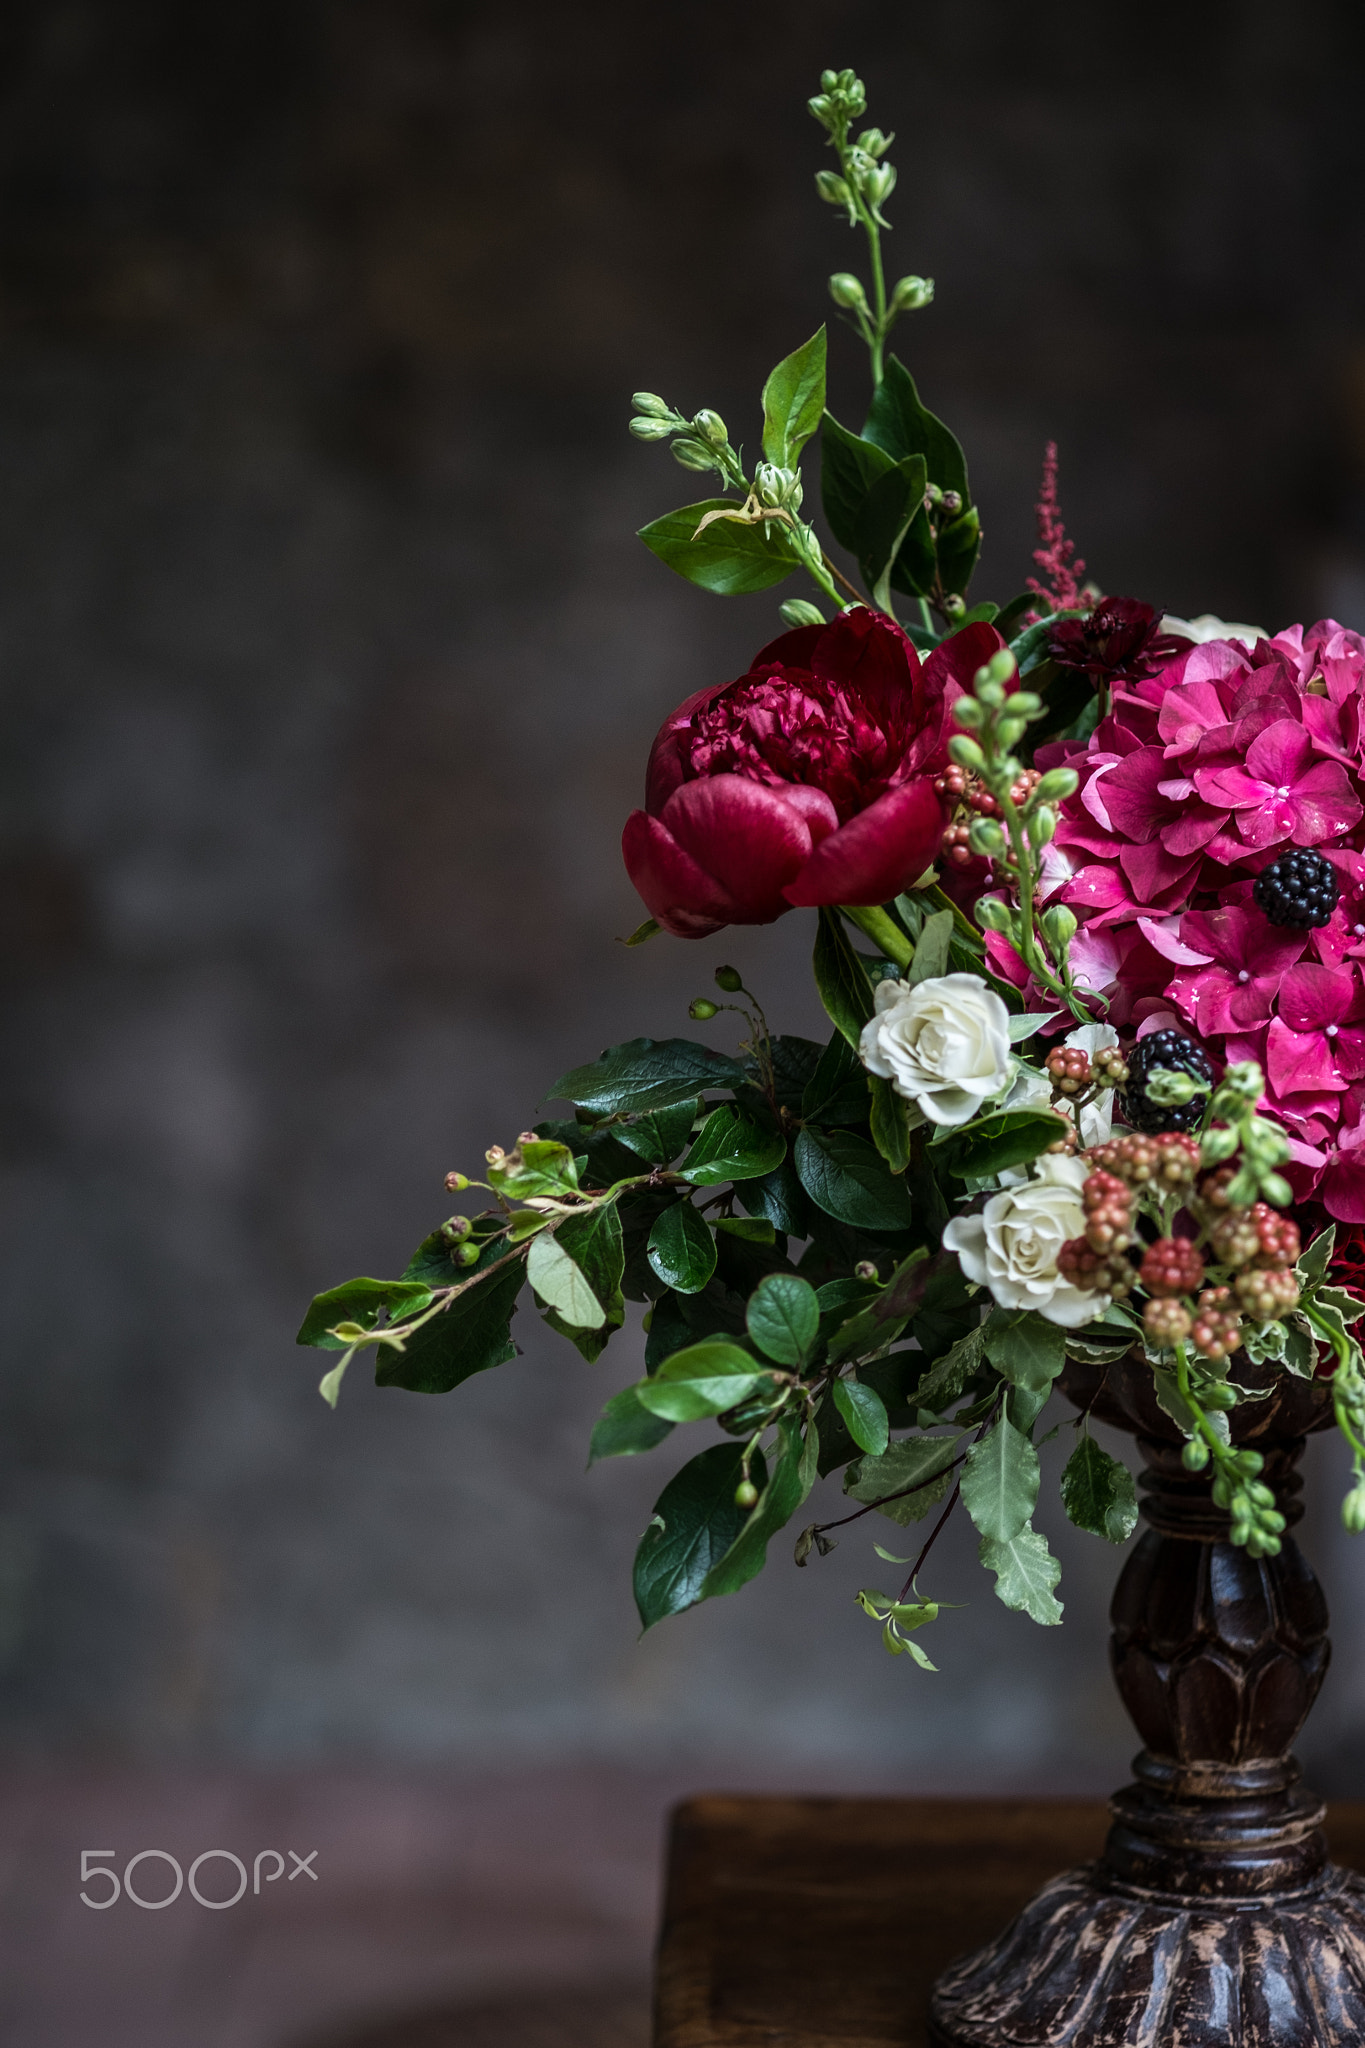 Wedding peony bouquet against vintage dark stone background. Rustic style.